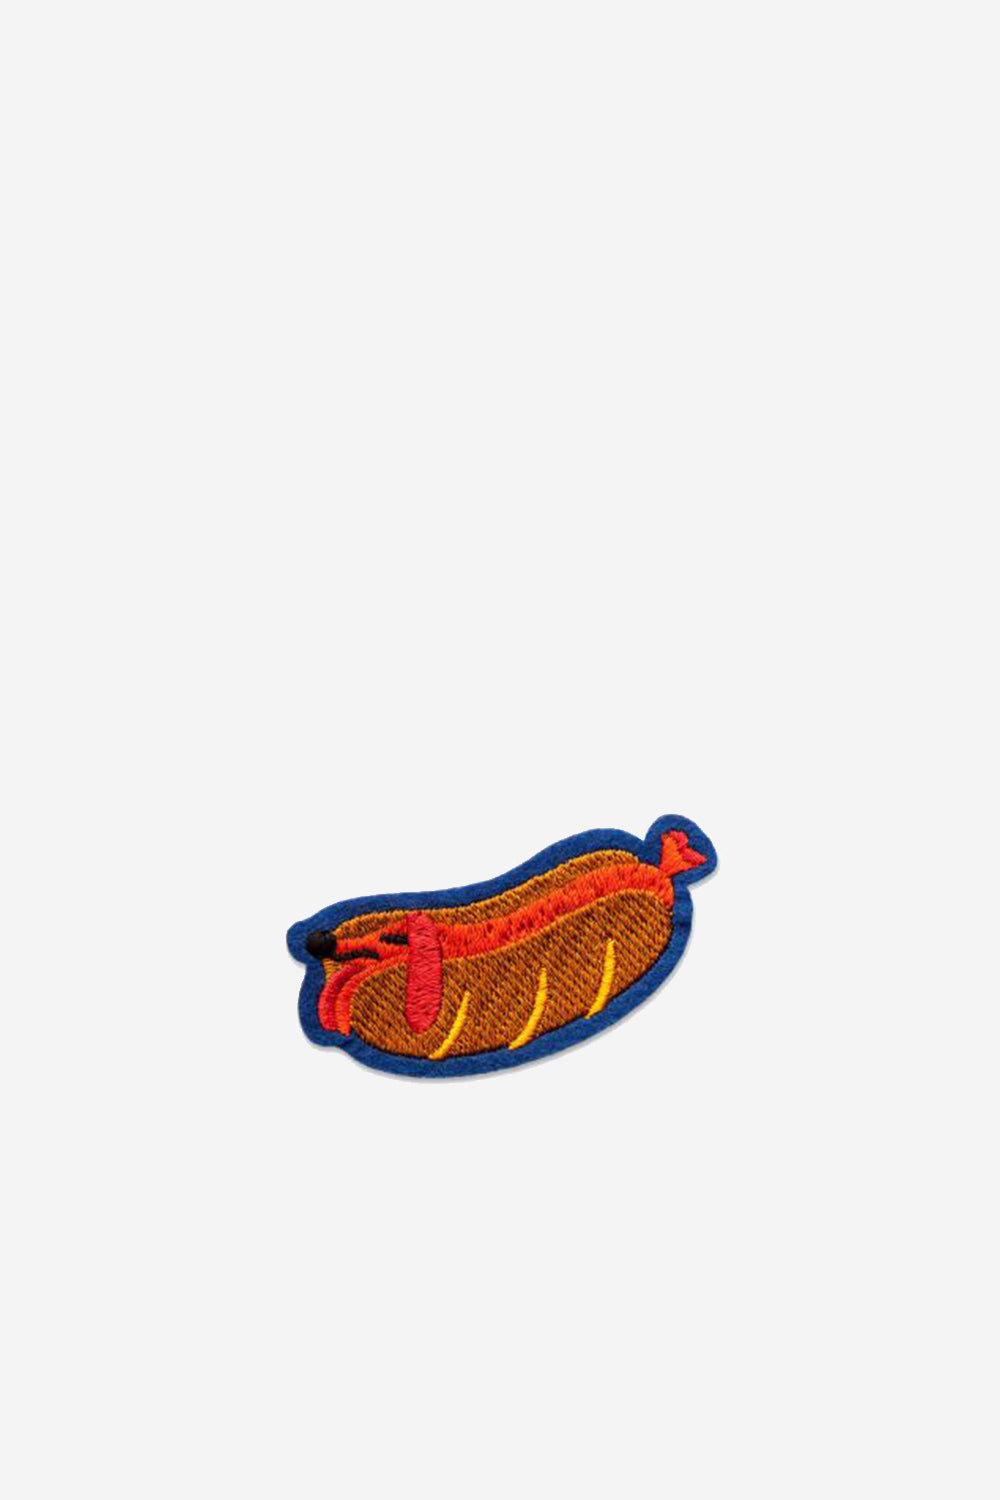 Hot dog Patch